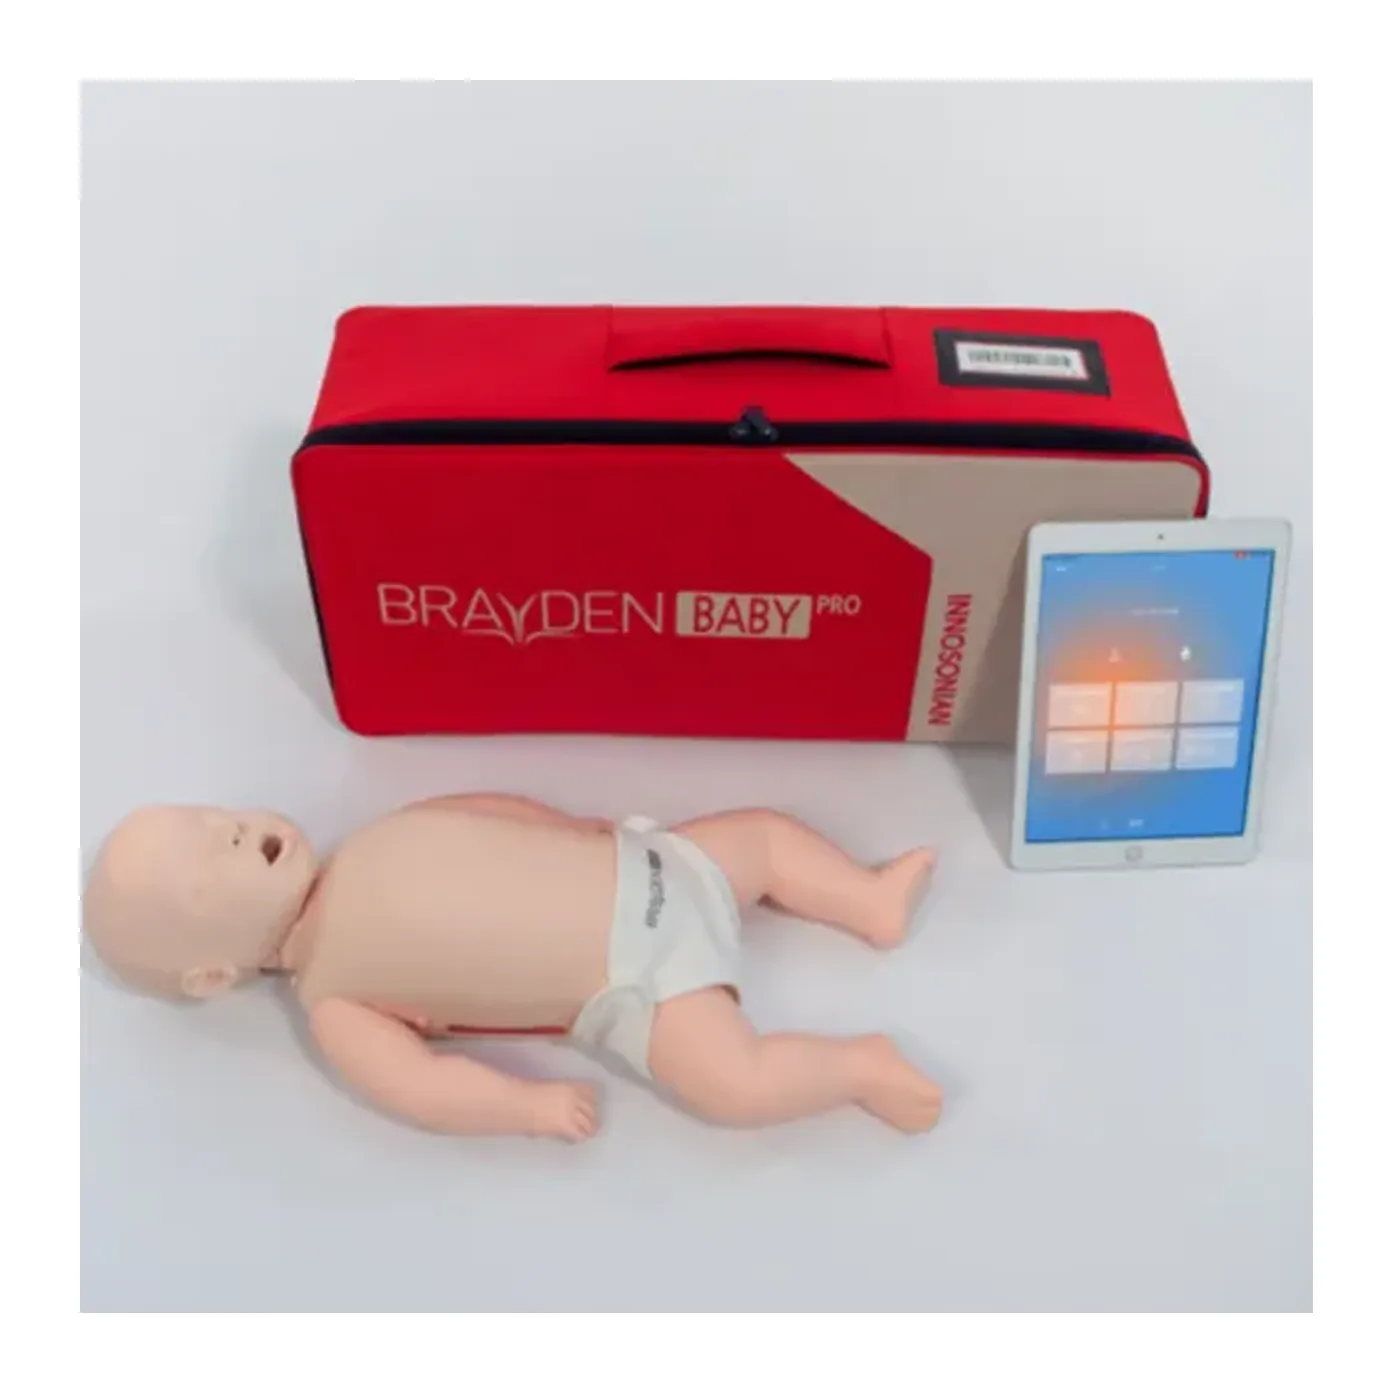 GB Medicali - Brayden Baby Pro